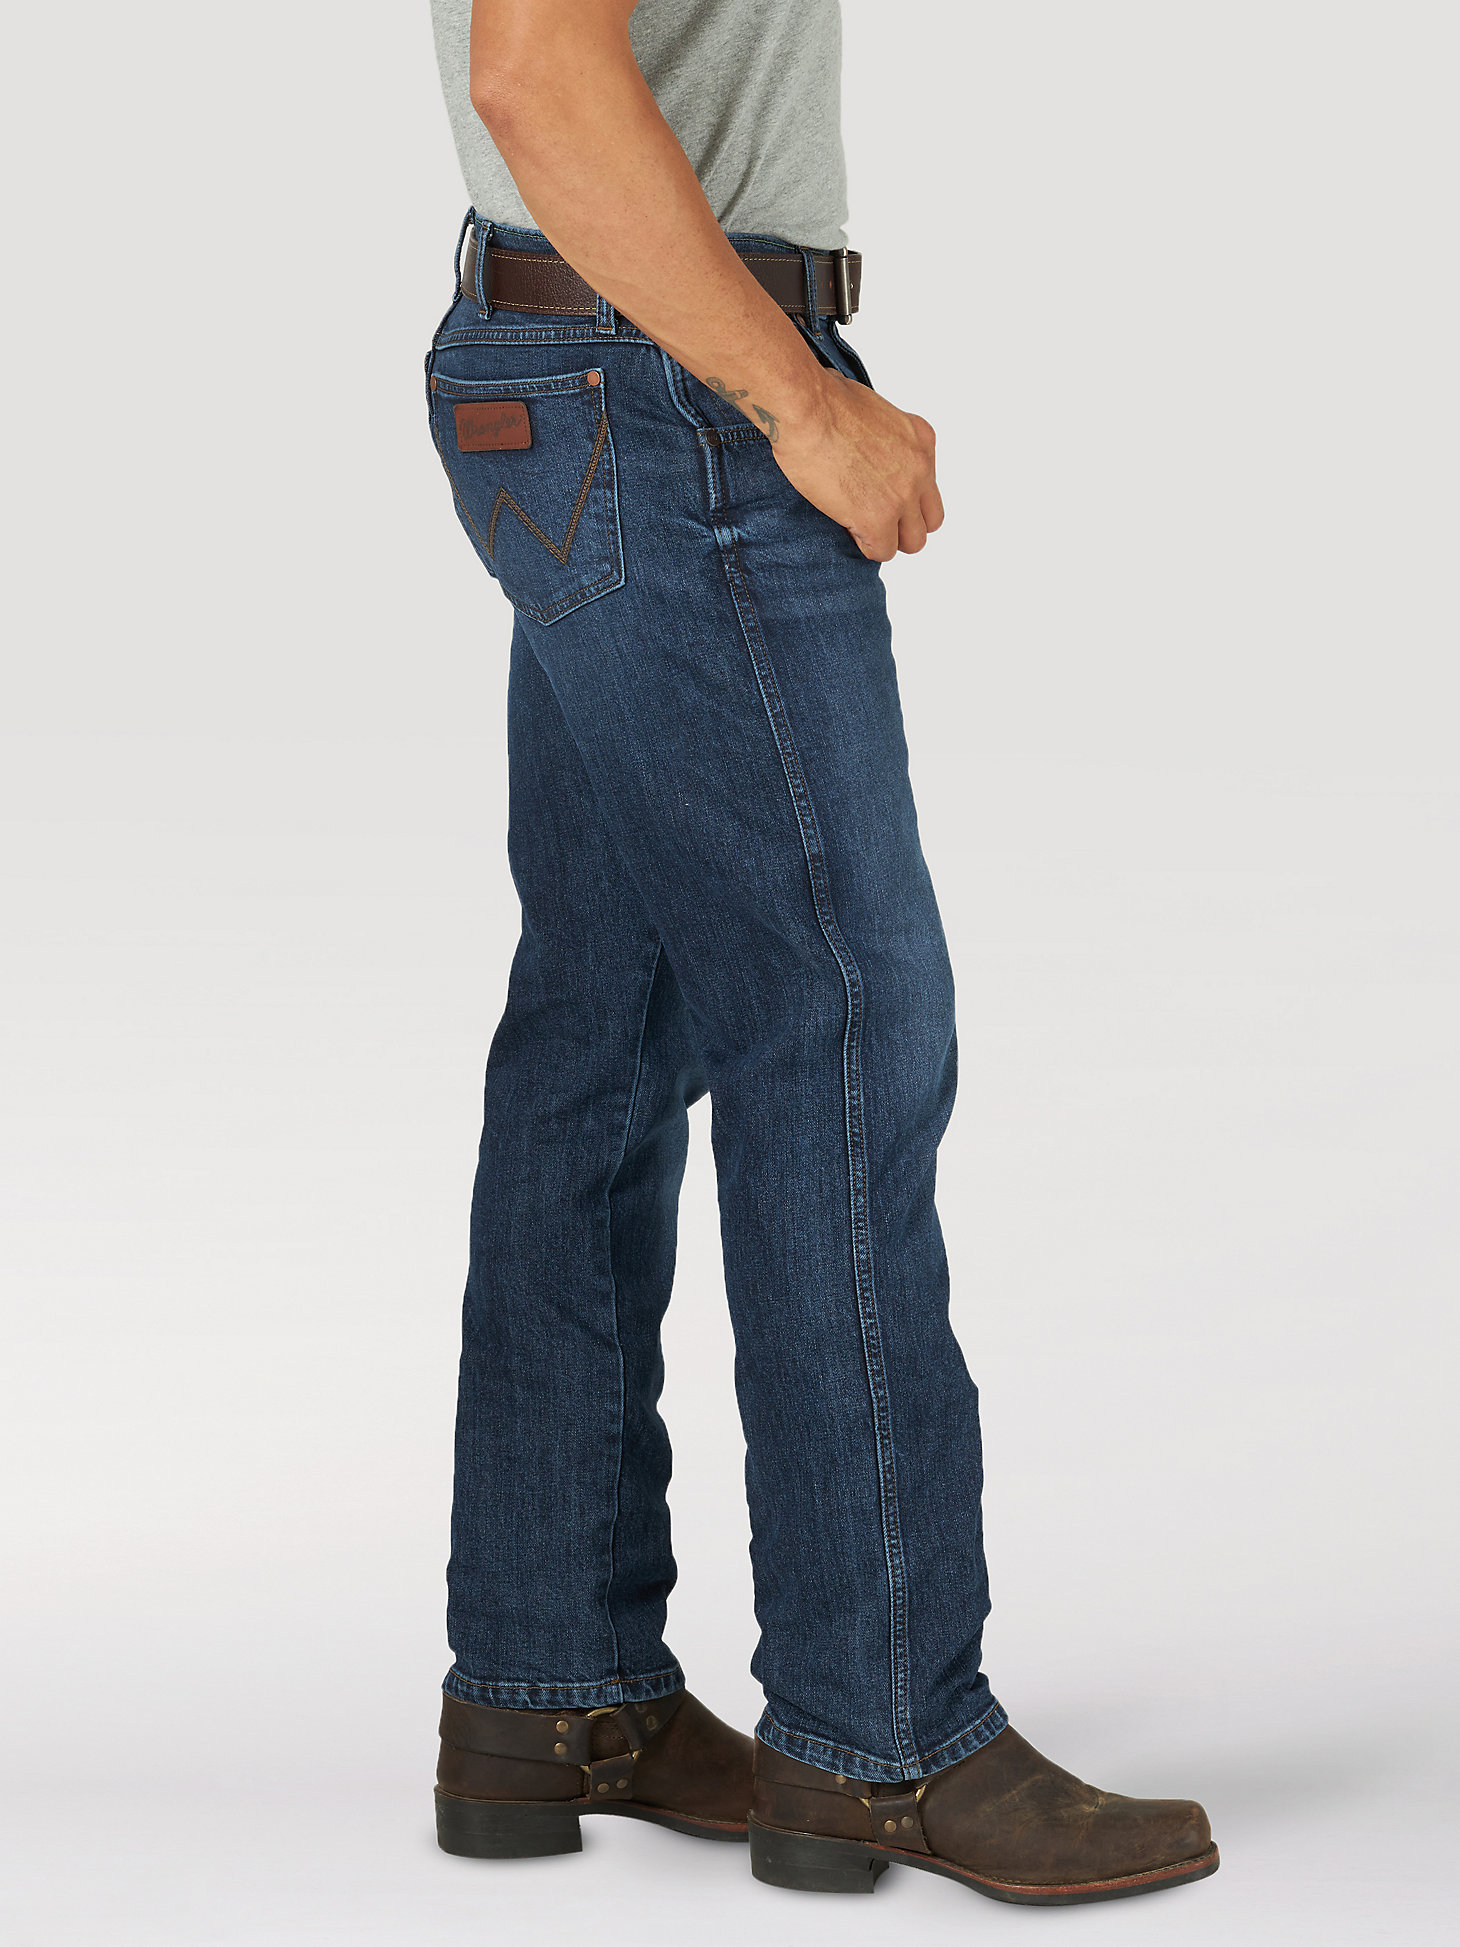 Men's Wrangler Retro® Slim Fit Straight Leg Jean in Dusty Navy alternative view 1